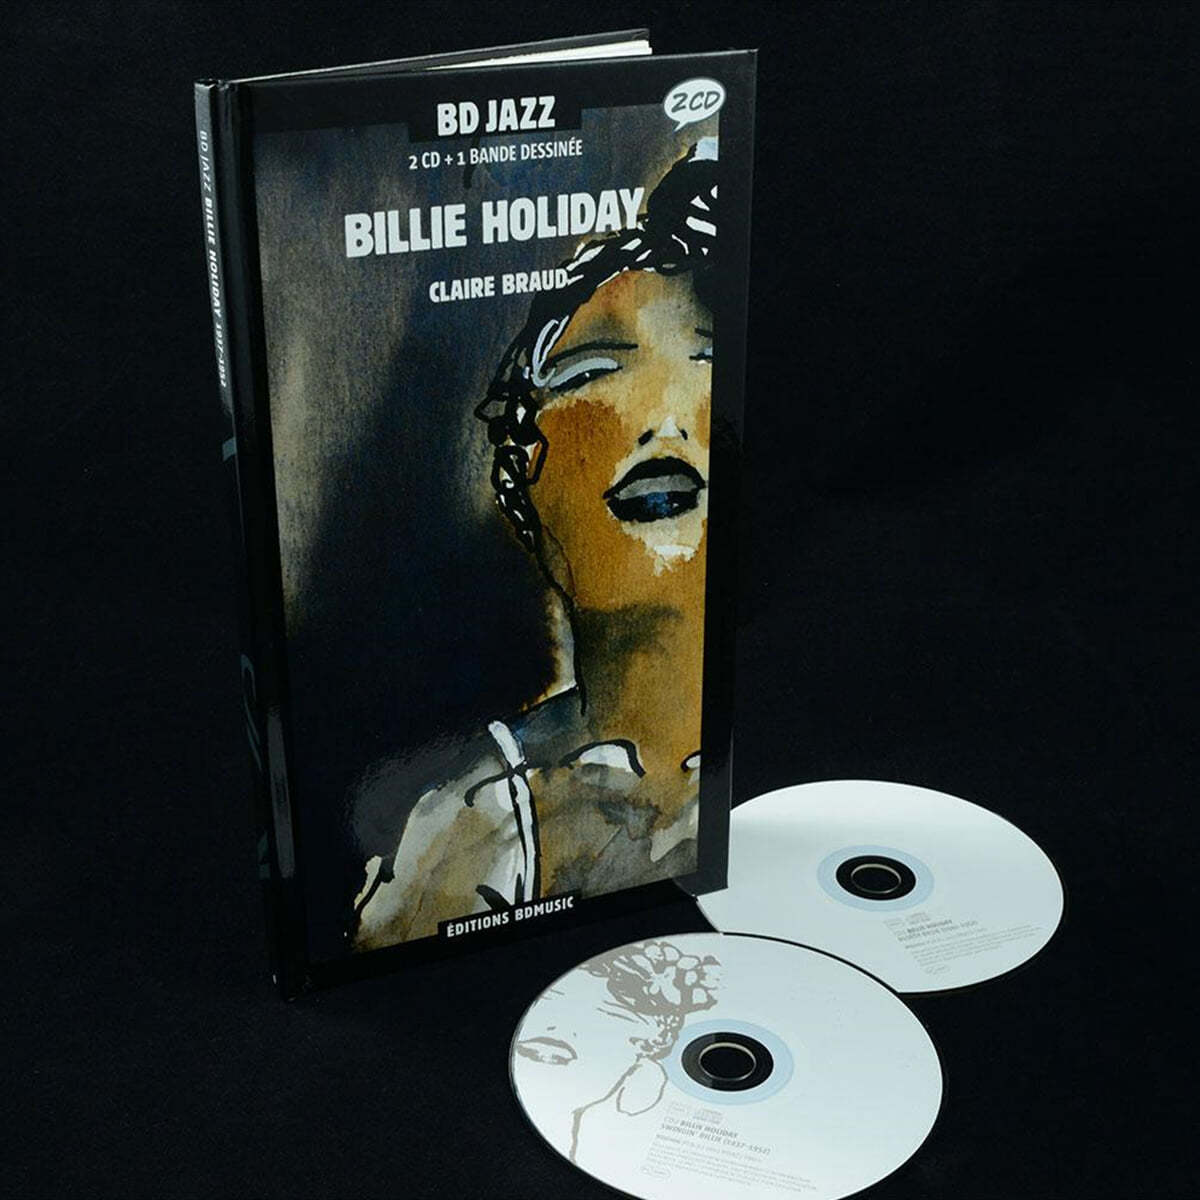 BILLIE HOLIDAY - BD JAZZ BILLIE HOLIDAY 1937-1952 [CLAIRE BRAUD]